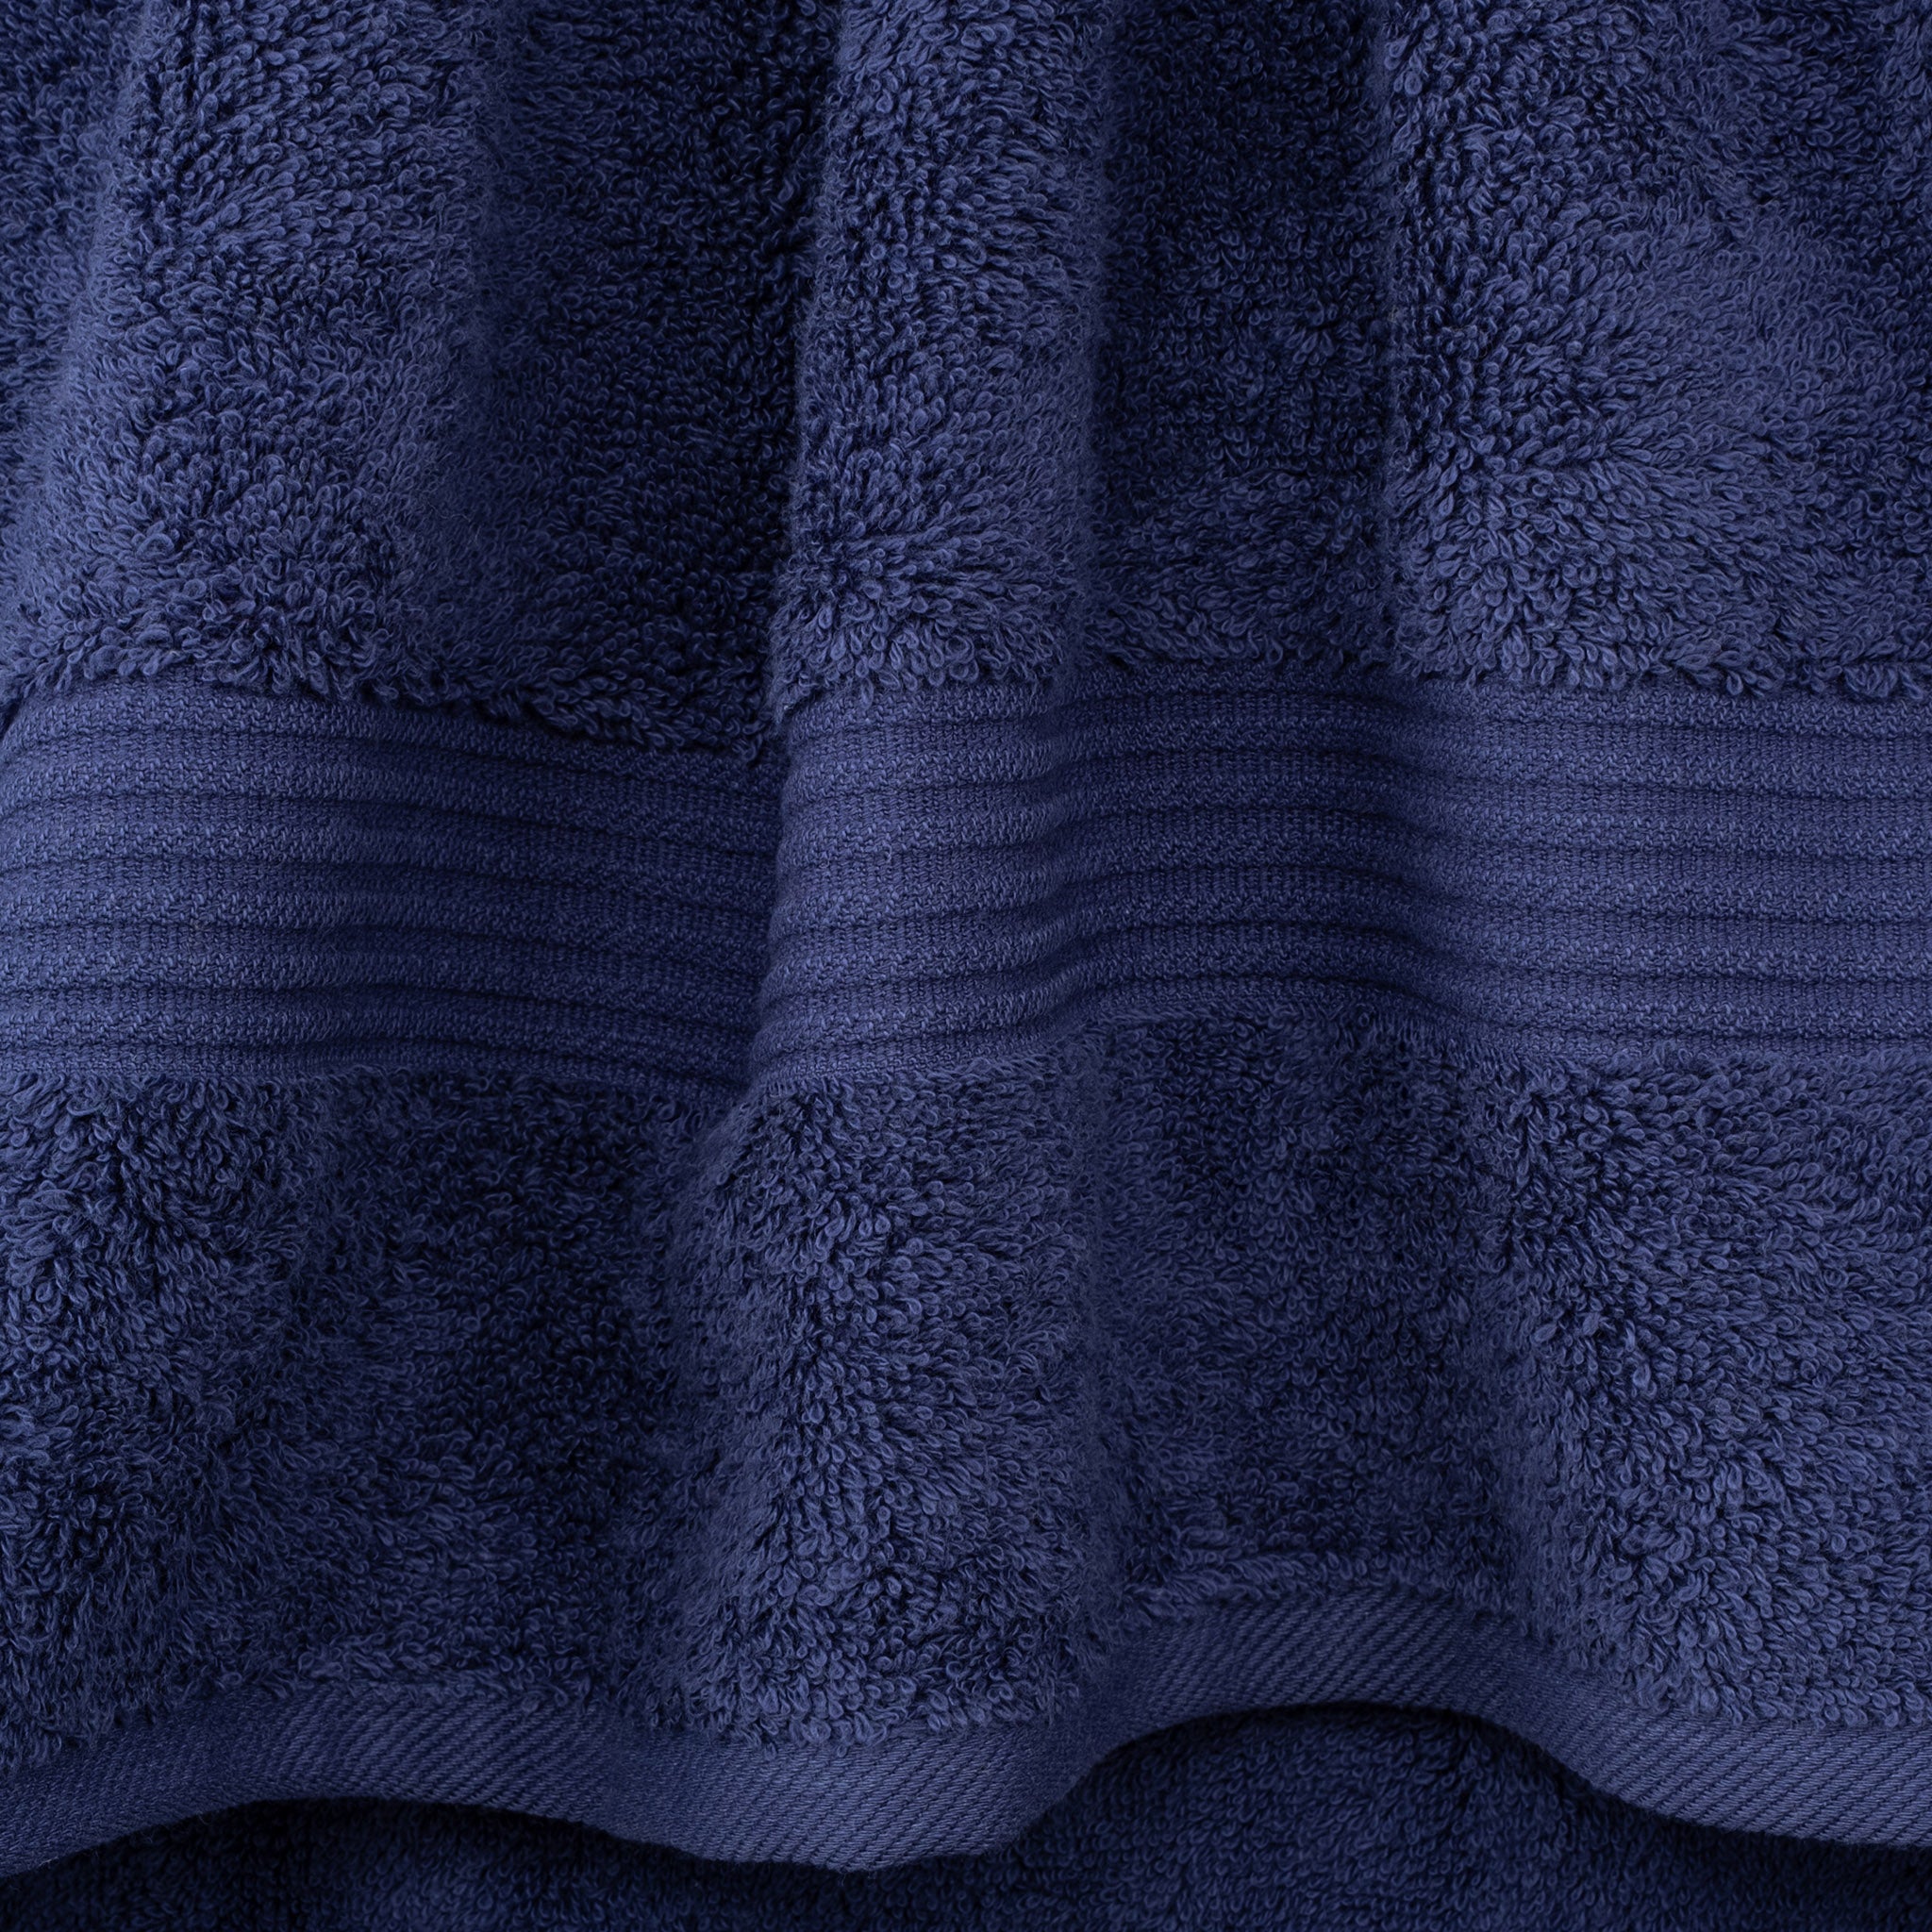 American Soft Linen Bekos 100% Cotton Turkish Towels, 4 Piece Hand Towel Set -navy-blue-03